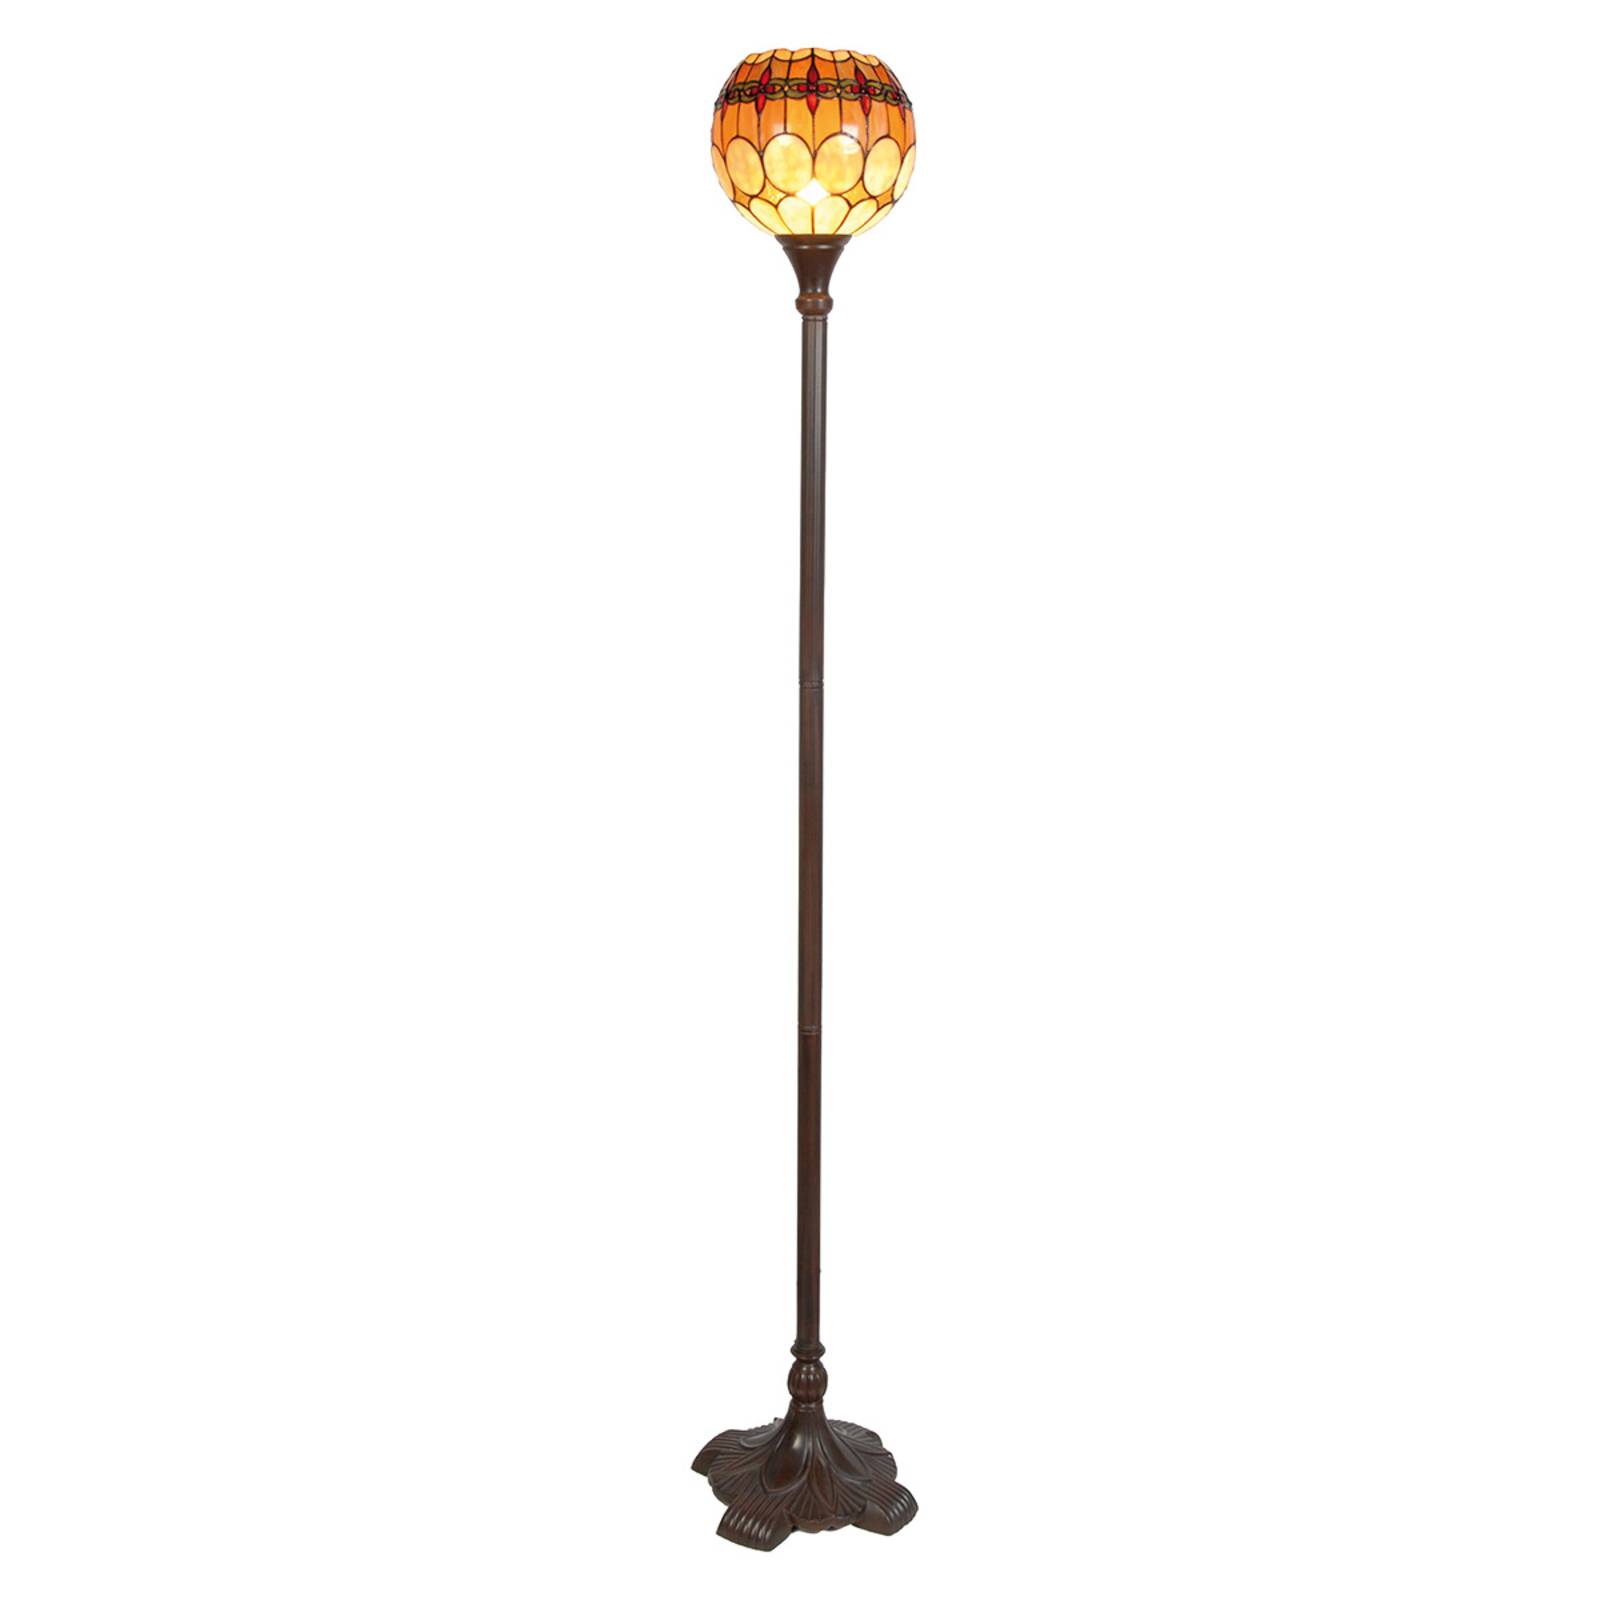 Clayre&Eef Niley - stojací lampa v Tiffany stylu